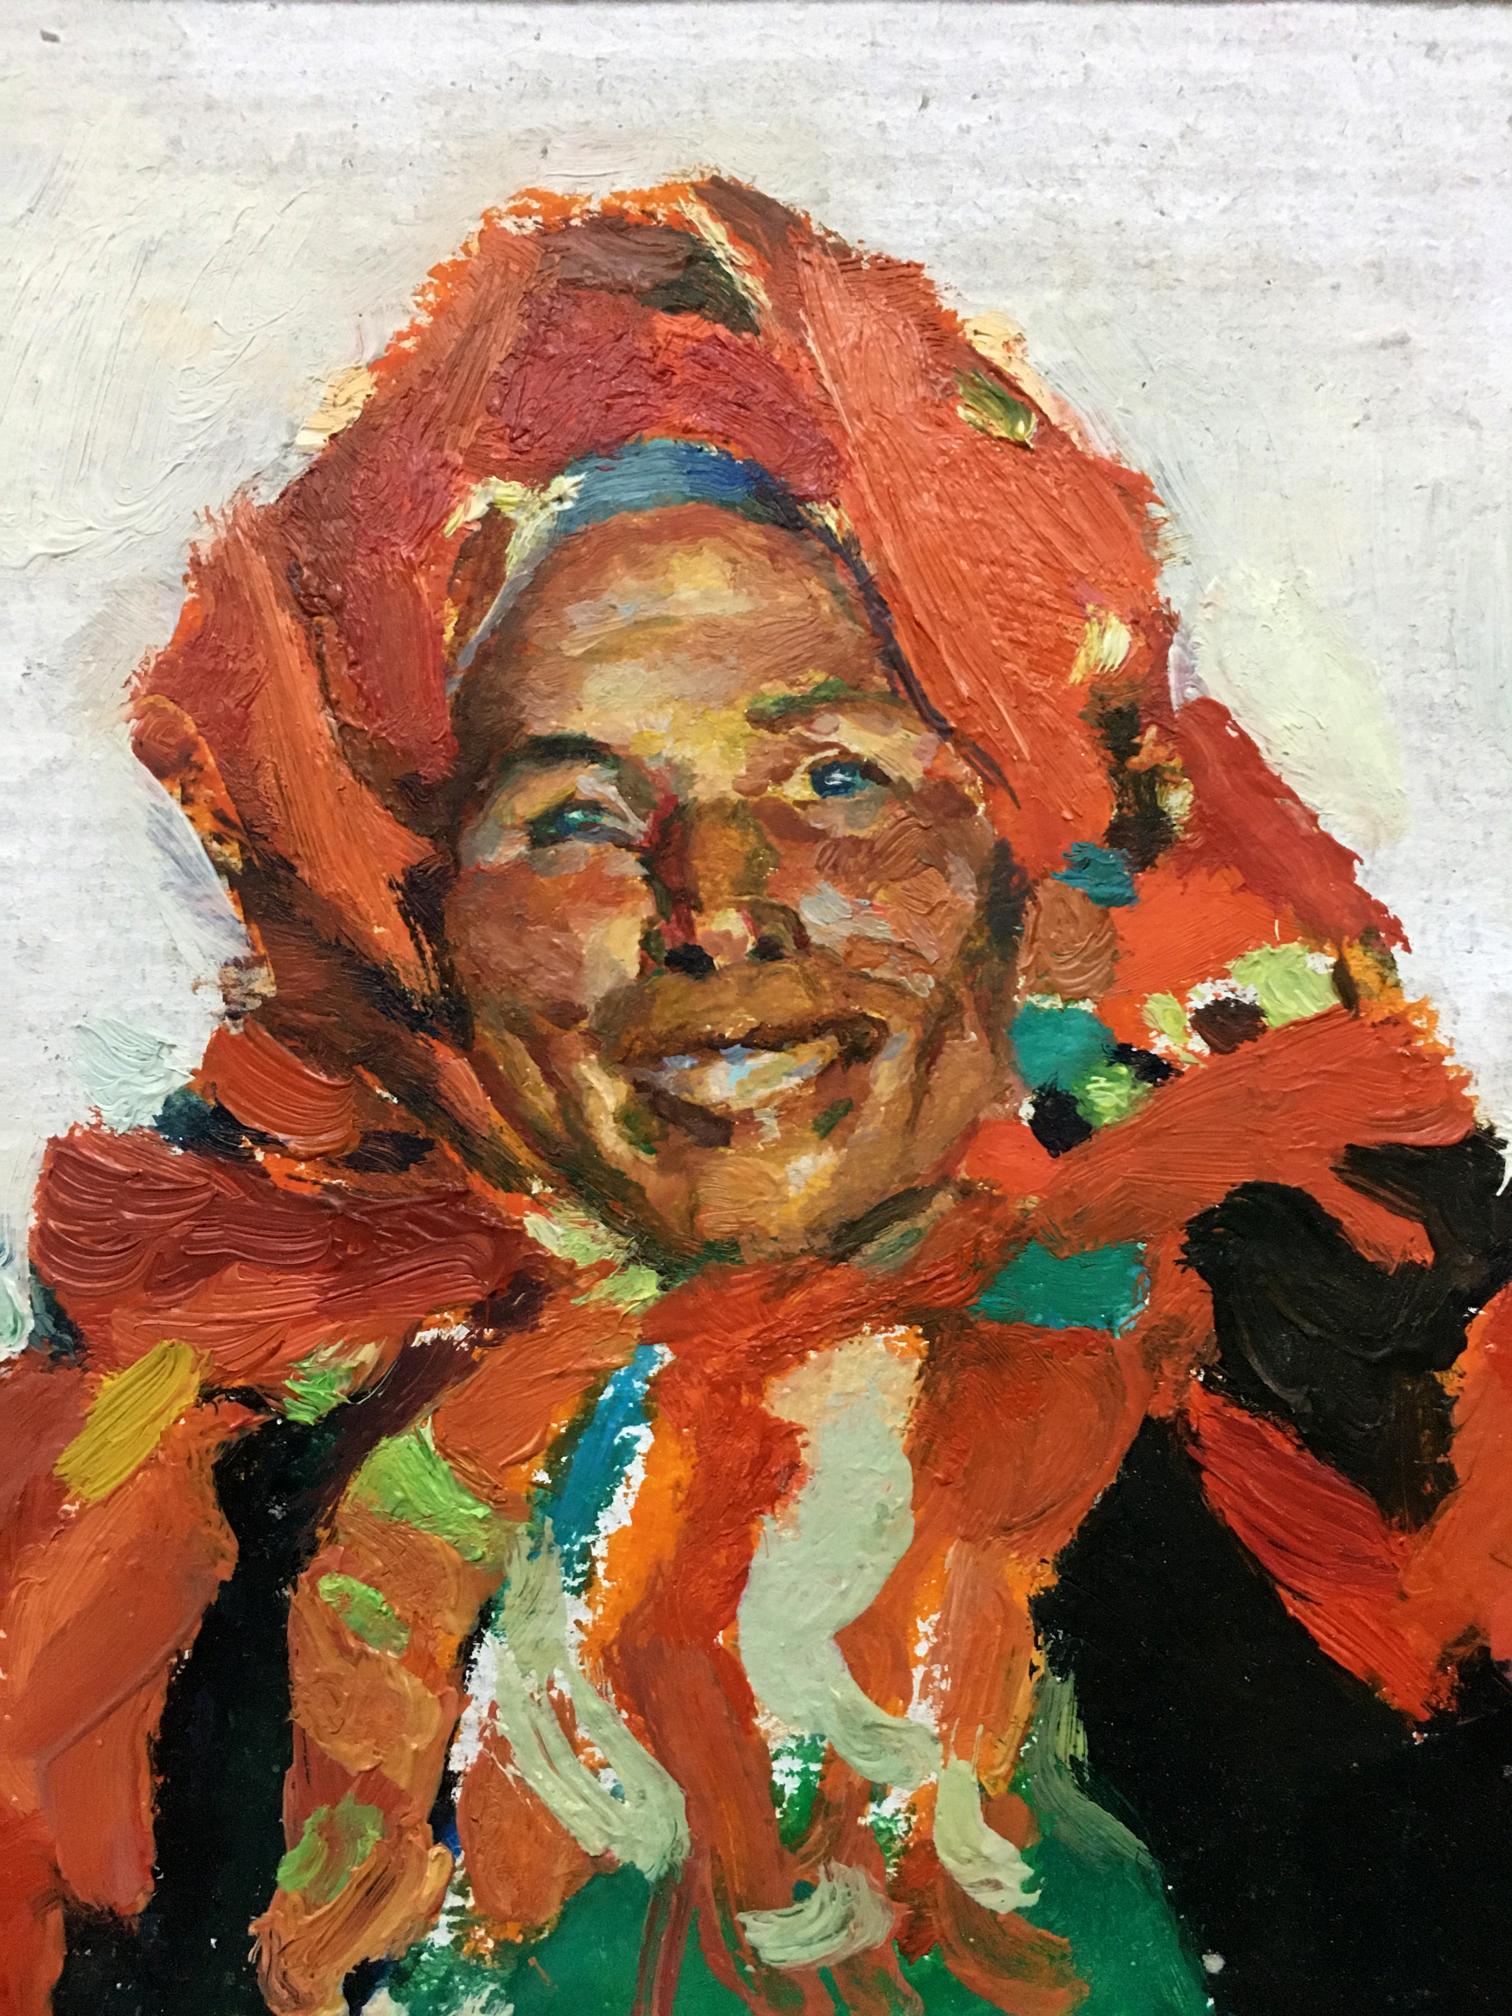 Yuri Davidovich Shteyngarts' oil painting Peasant Woman